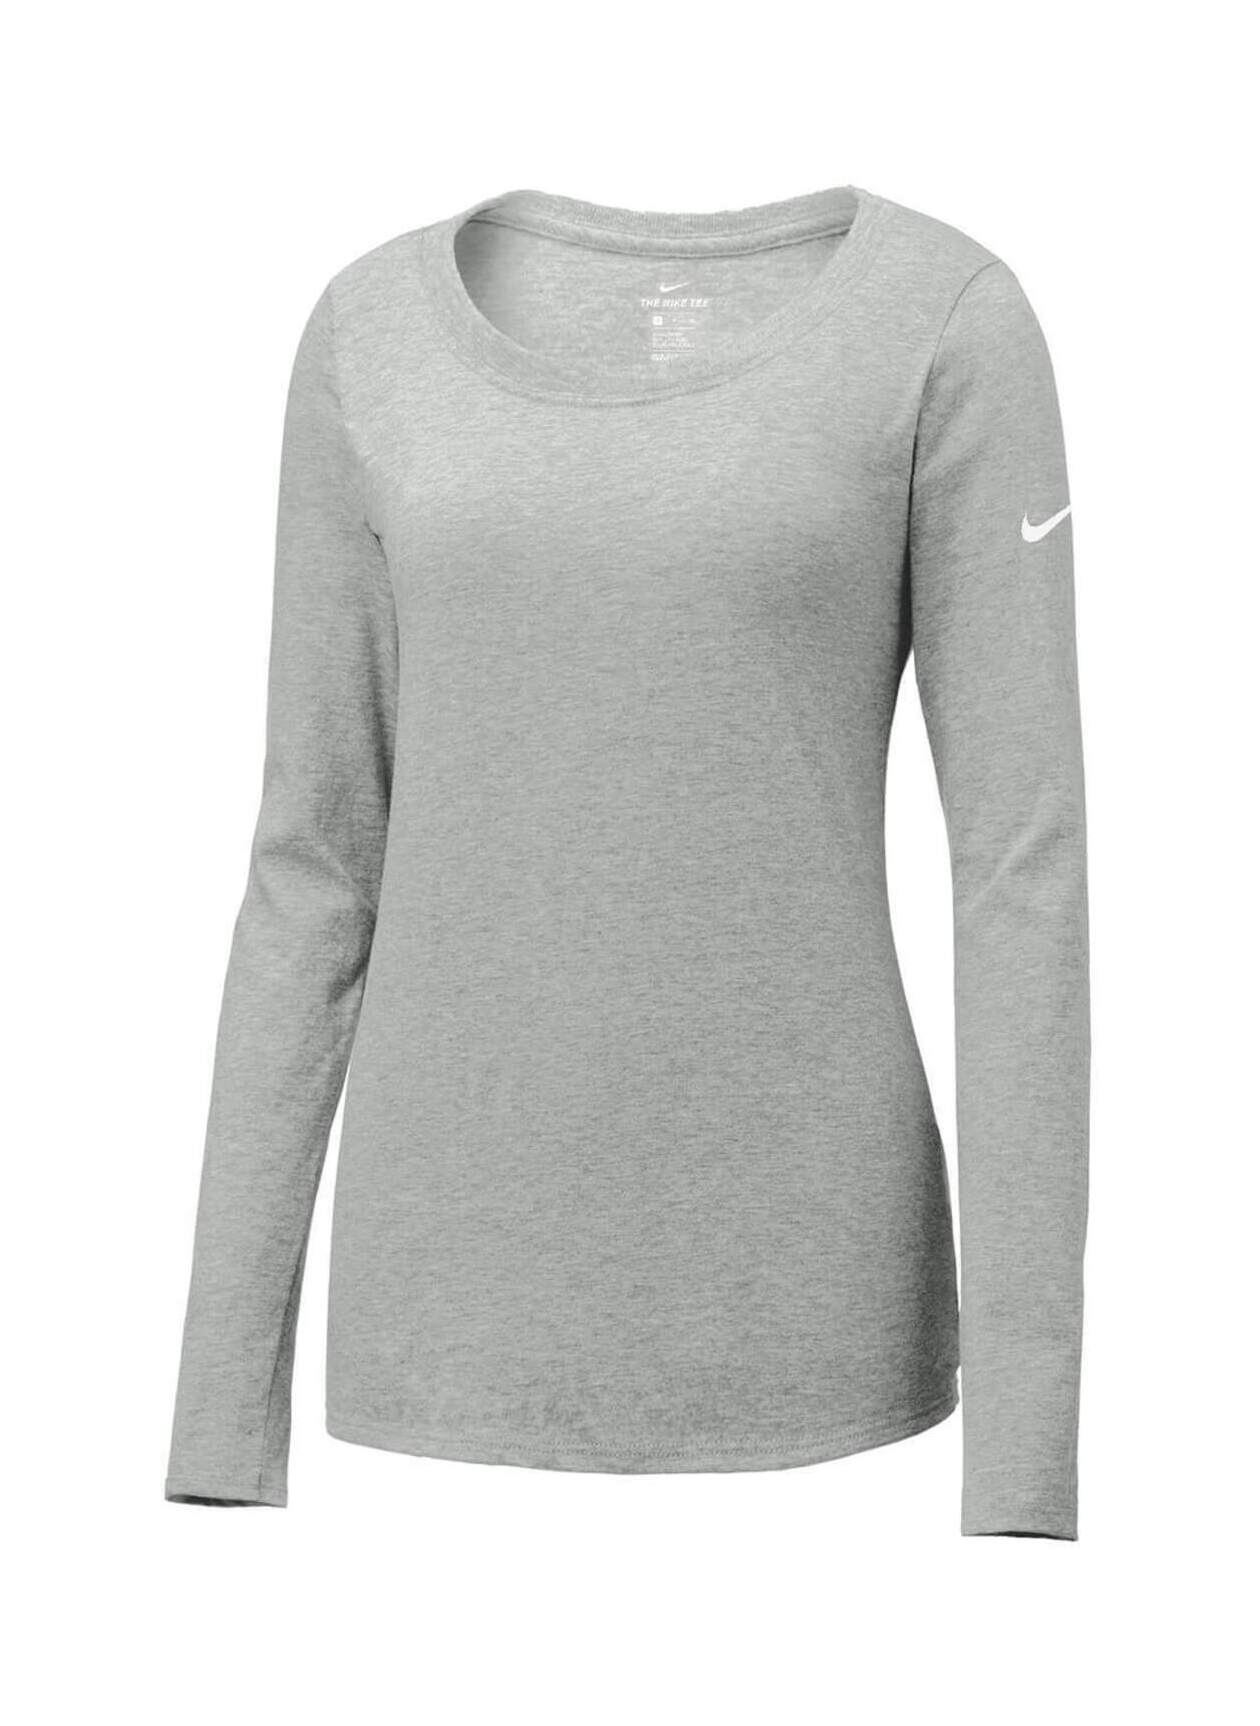 Nike Women's Dark Grey Heather Core Cotton Long-Sleeve Scoop Neck T-Shirt